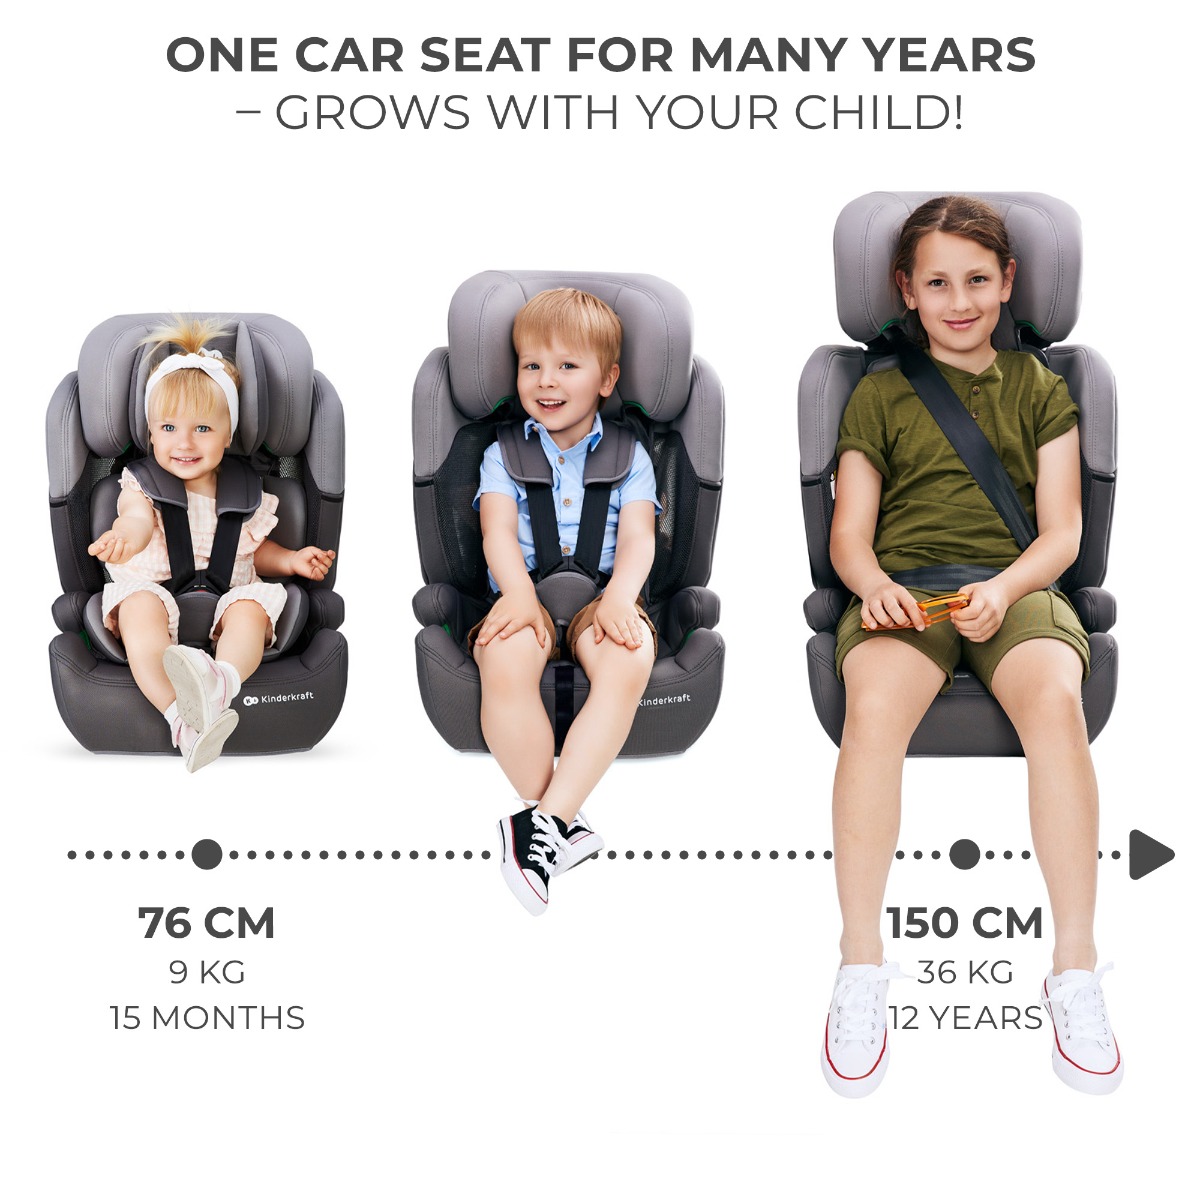 Car seat COMFORT UP i-Size pink